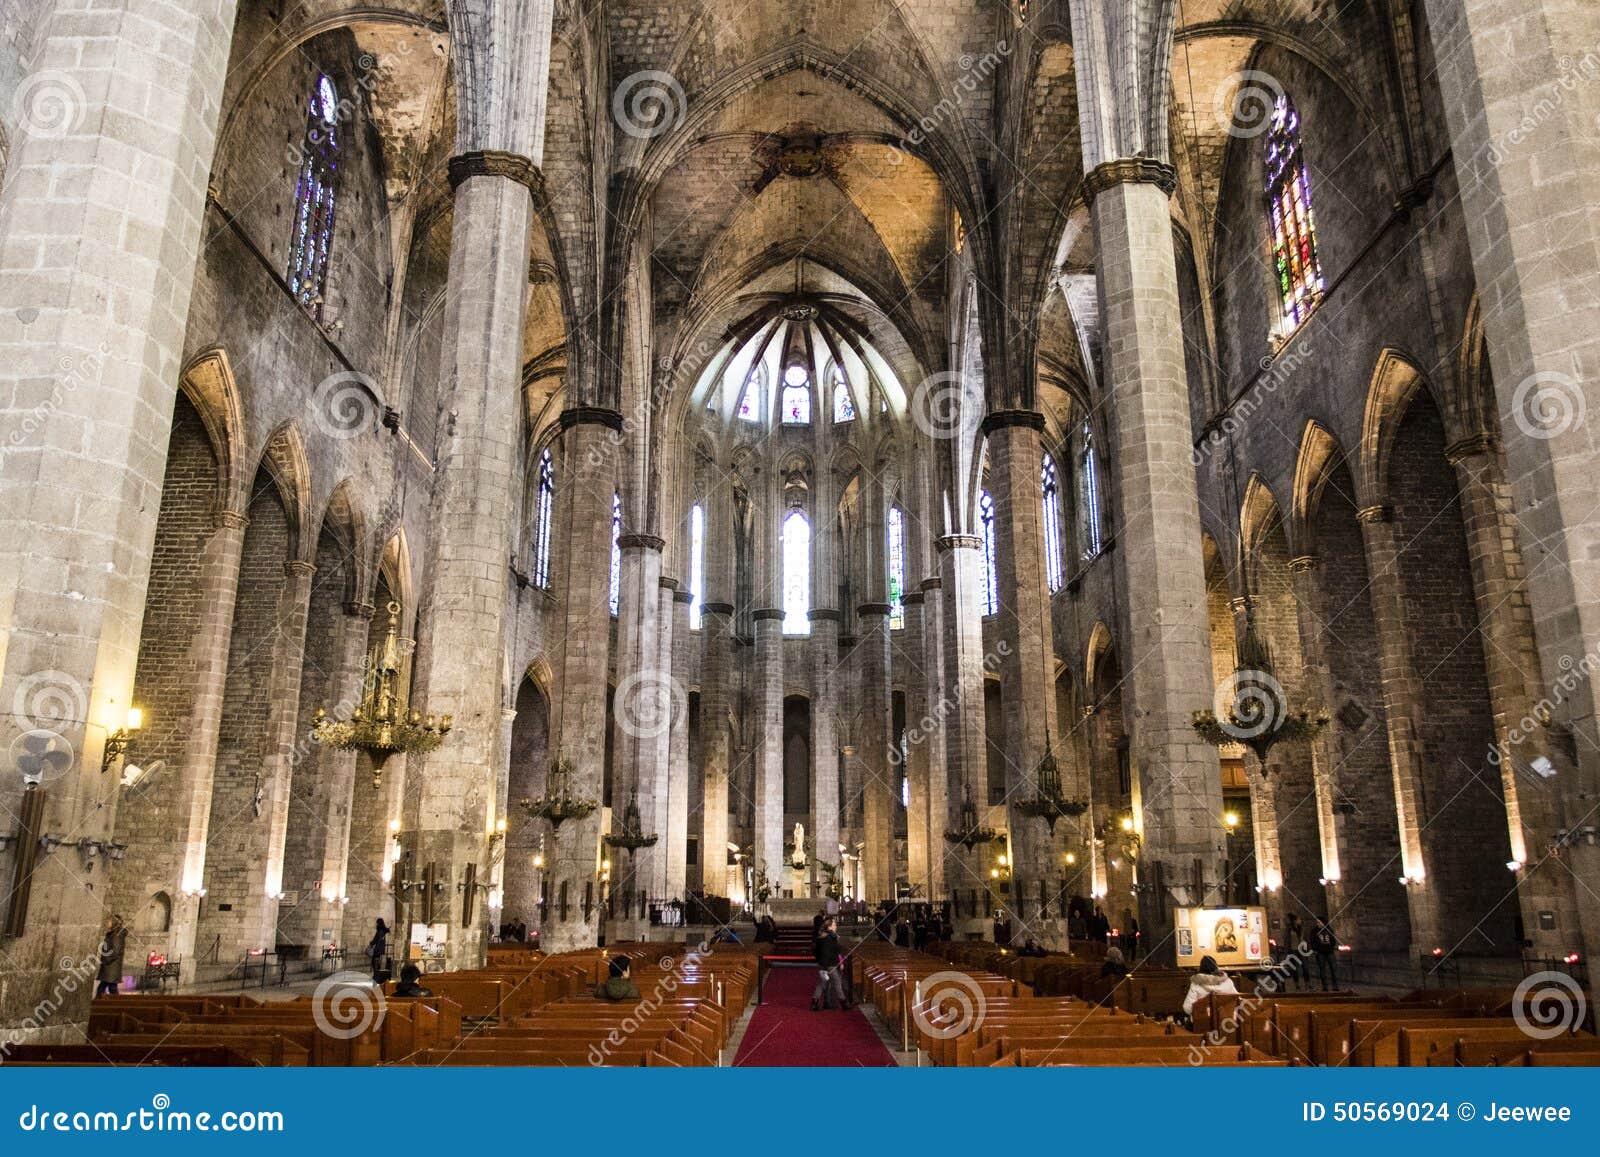 Interior Of The Santa Maria Del Mar Church In Barcelona Catalonia Spain Editorial Stock Image Image Of Catalonia Religion 50569024